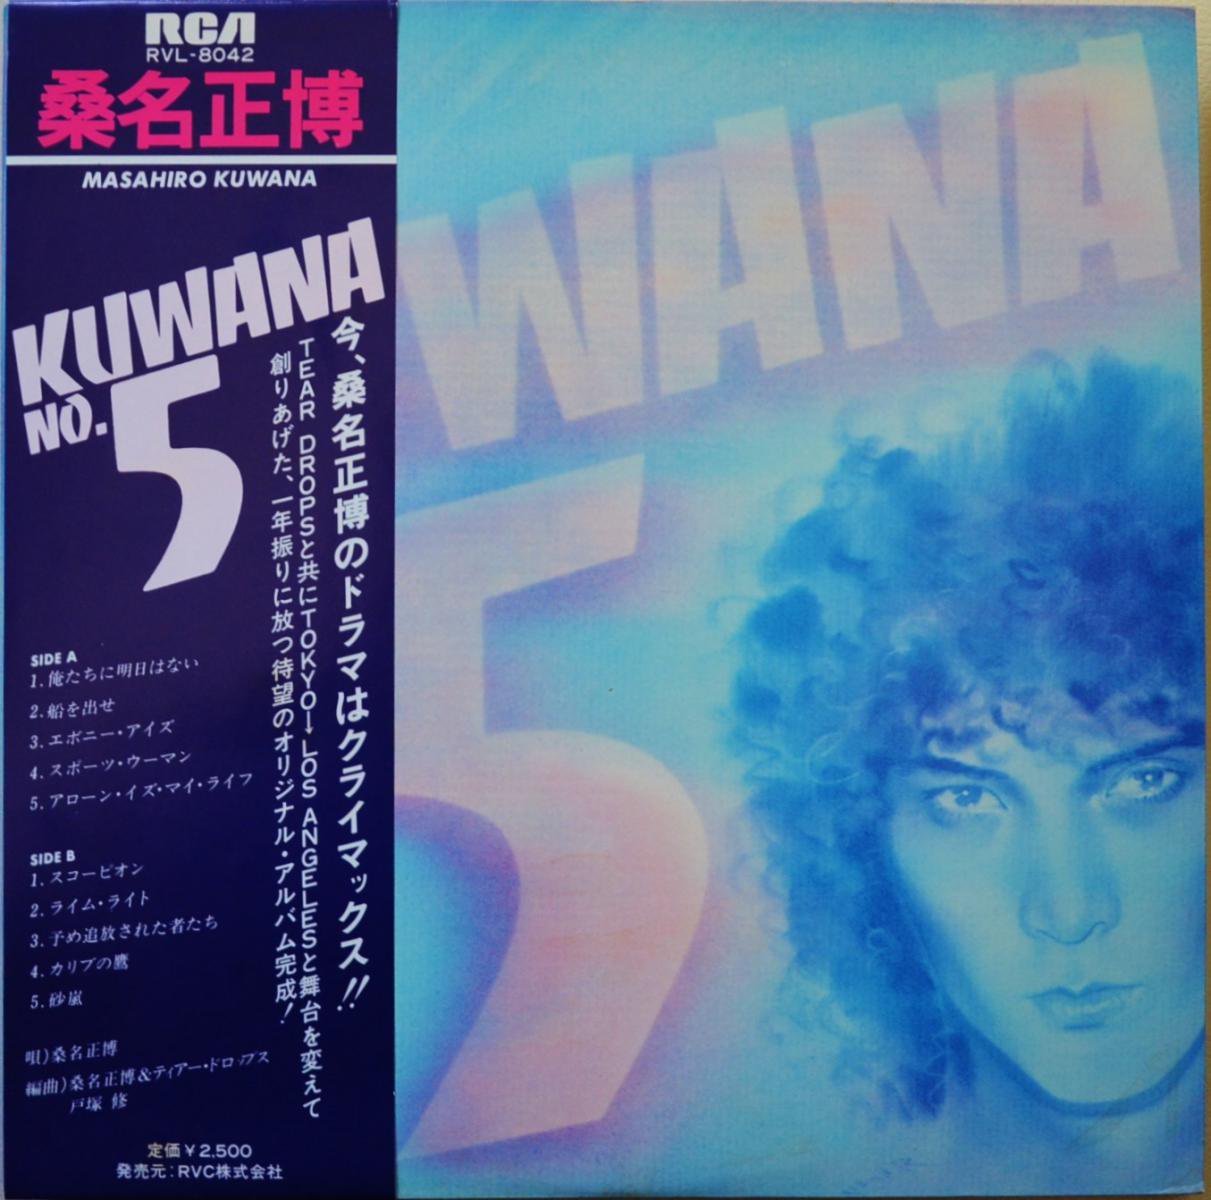 桑名正博 Masahiro Kuwana Kuwana No 5 Lp Hip Tank Records